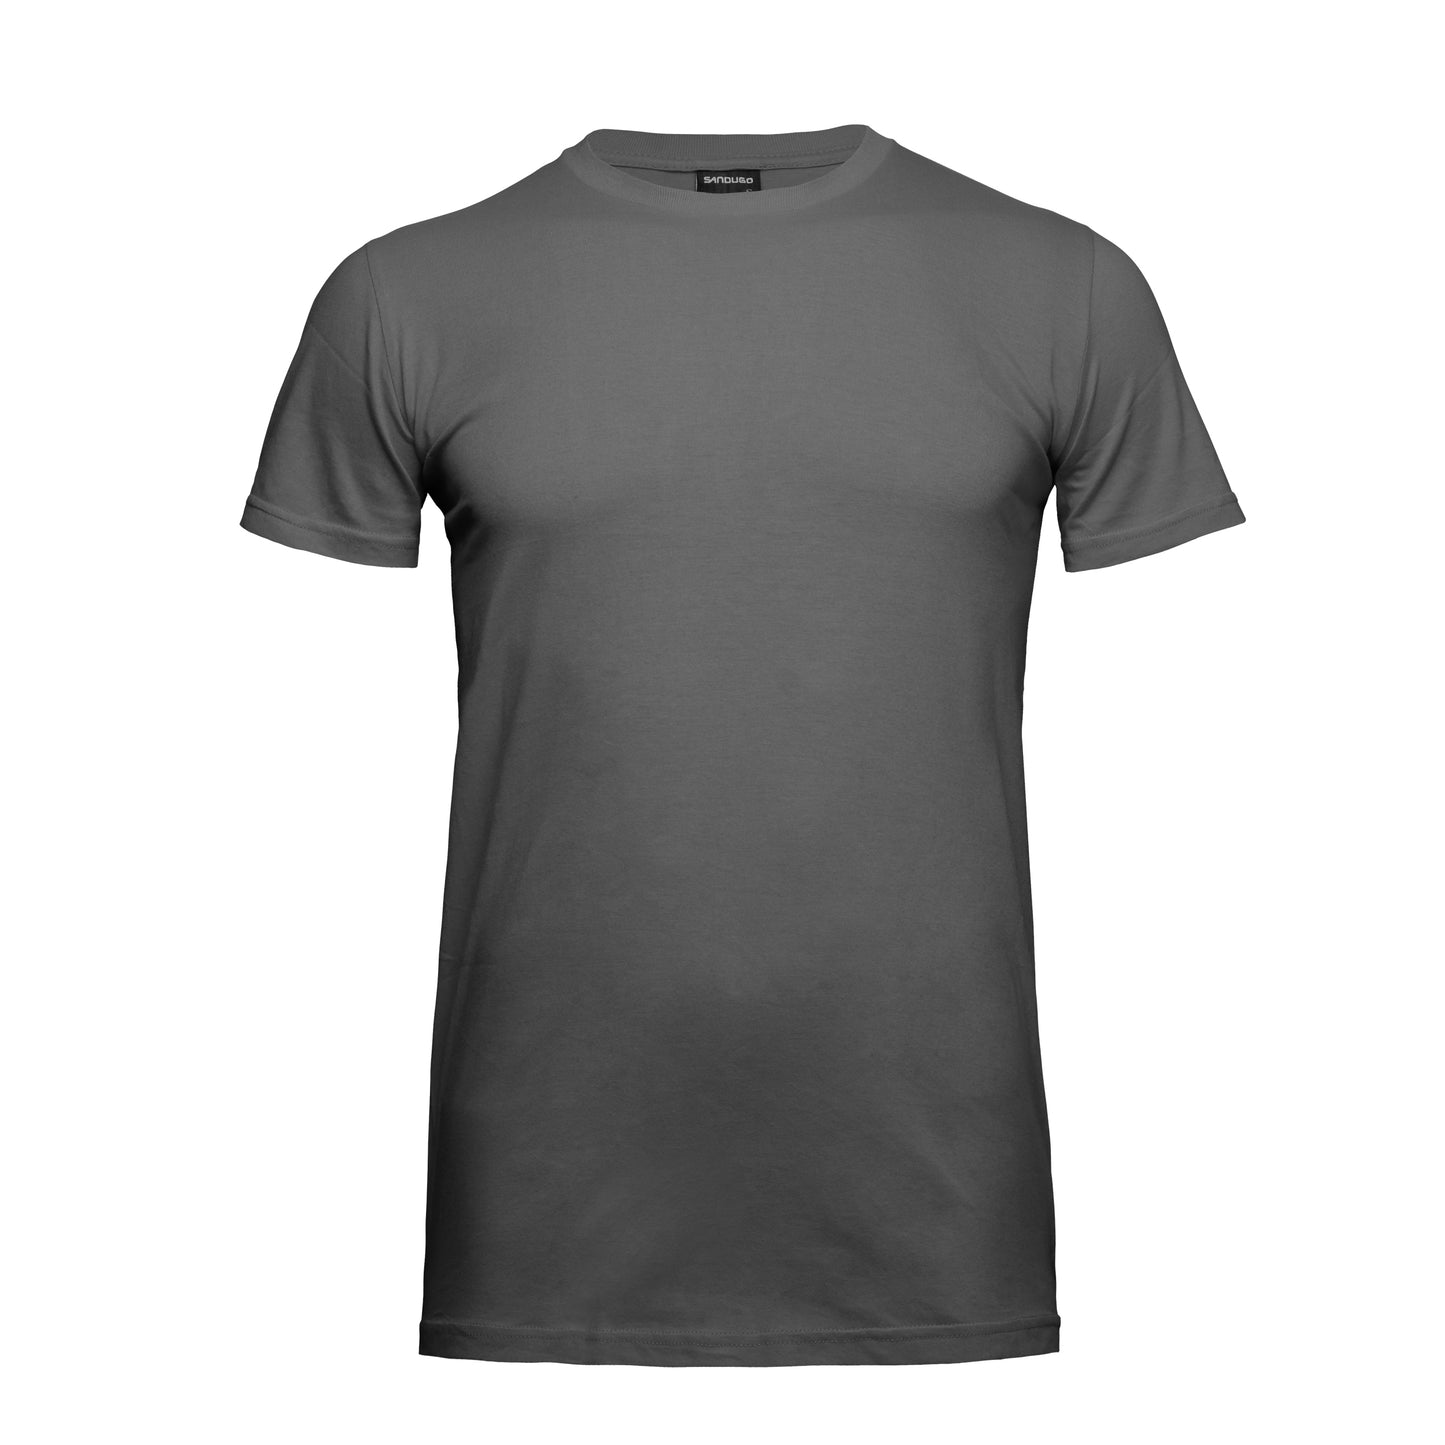 Sandugo CTSLOW Cotton T-Shirt